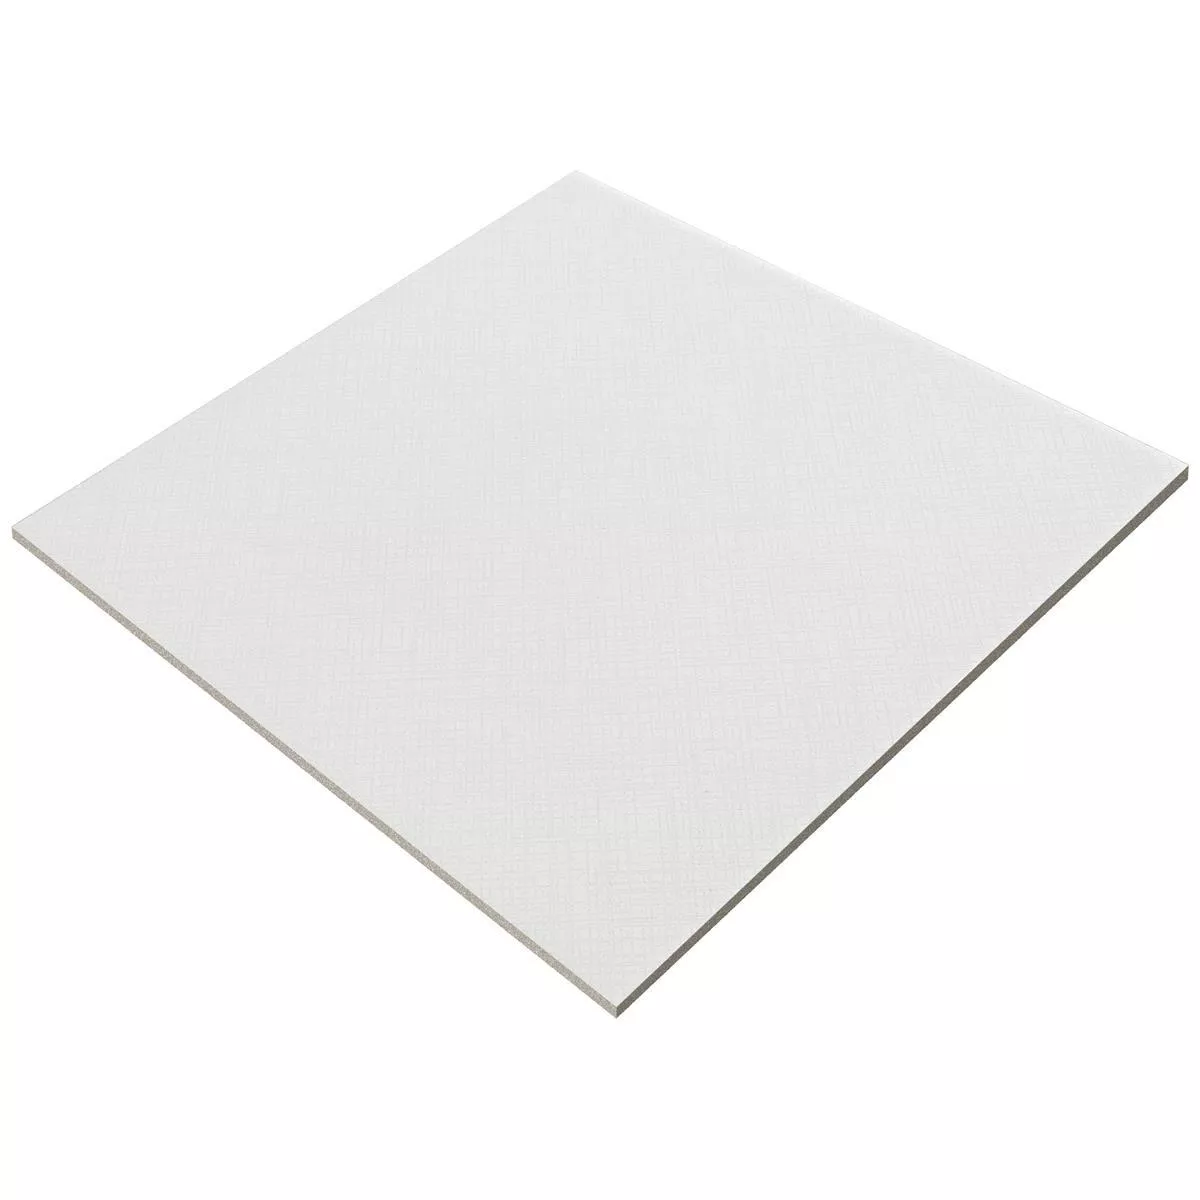 Podlahové Dlaždice Cementový Vzhled Wildflower Bílá Základní Dlaždice 18,5x18,5cm